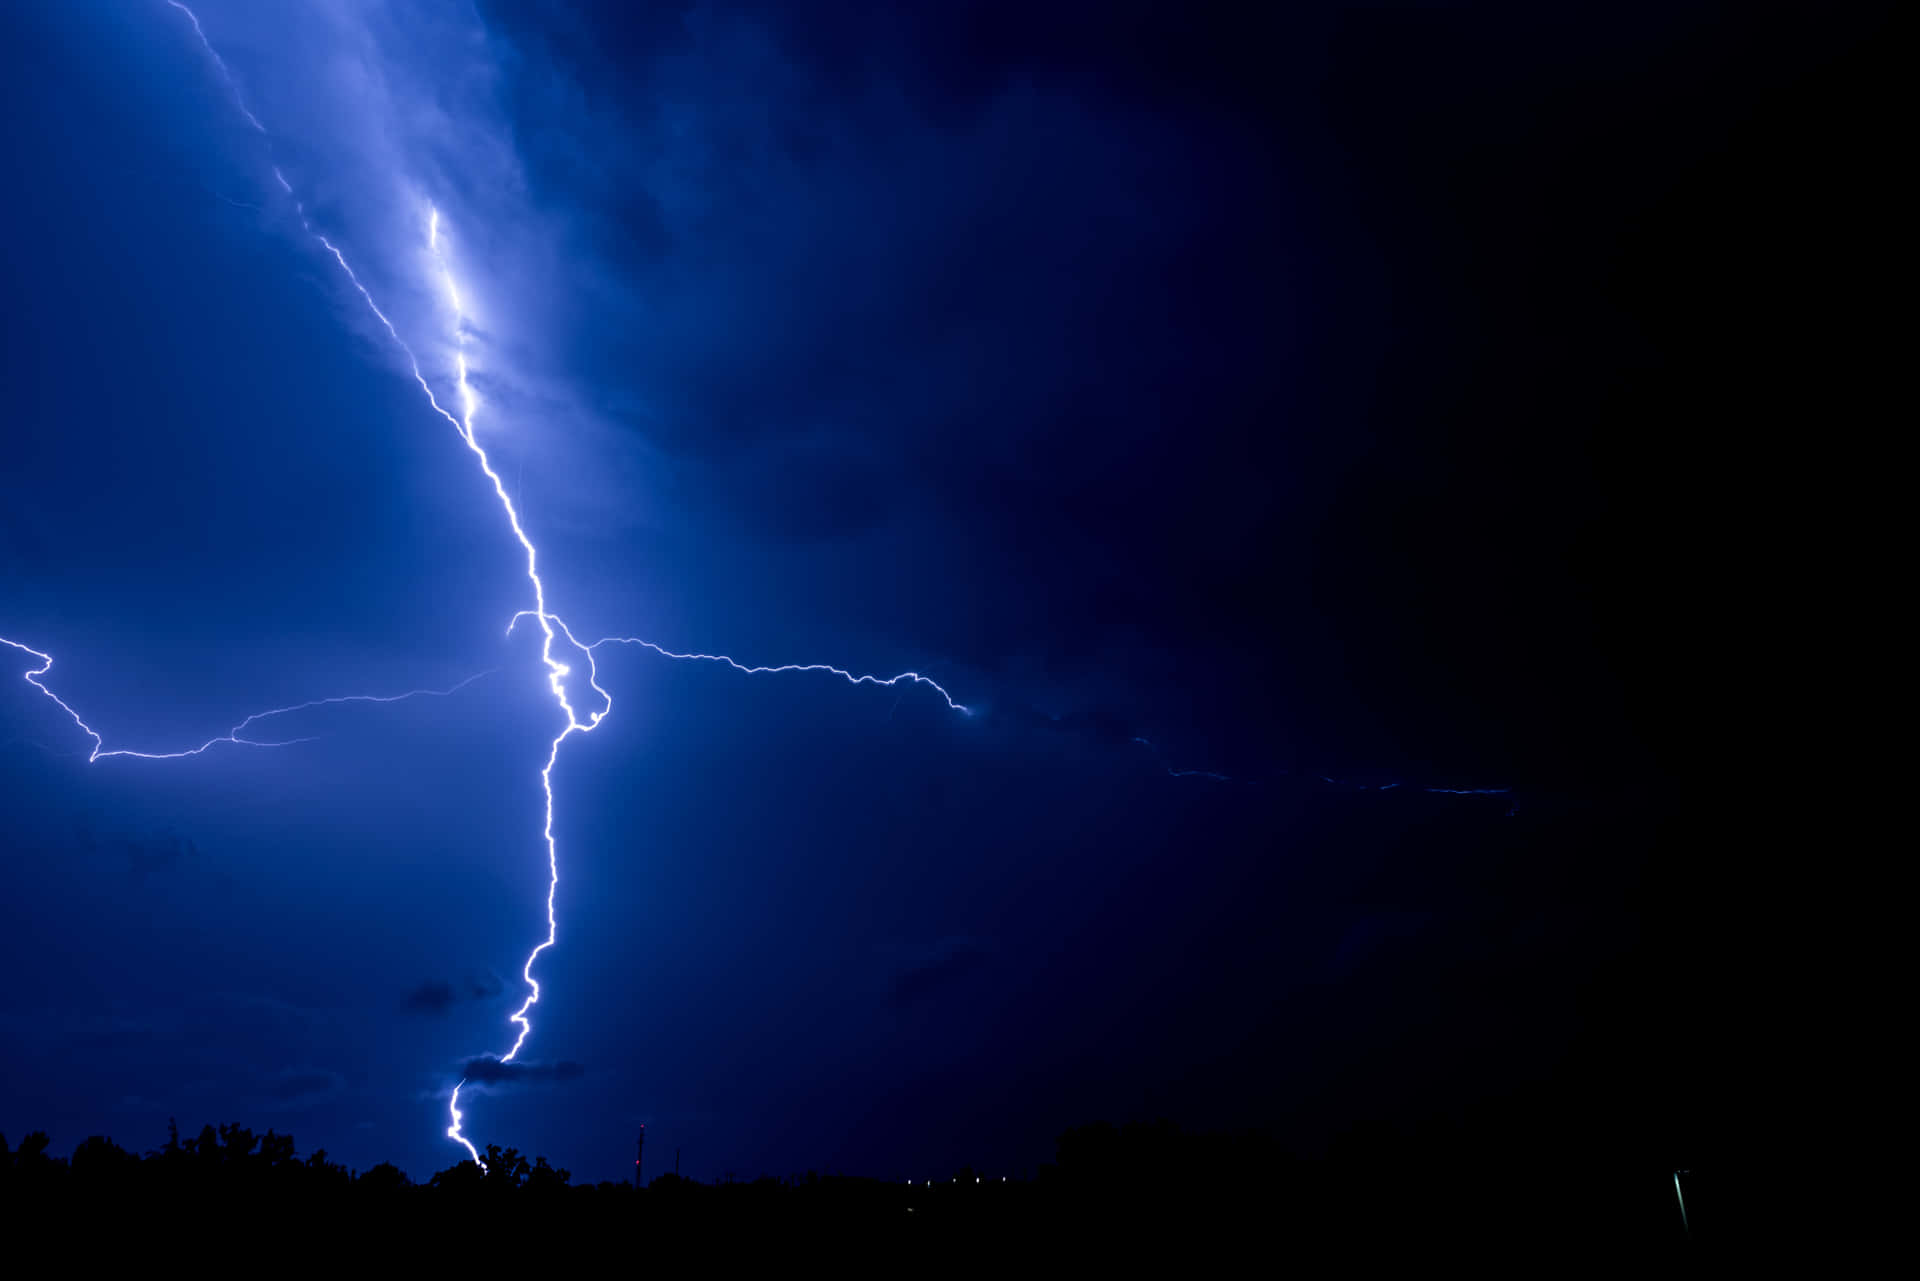 Blue Lightning Strikes Against a Pitch-Black Sky